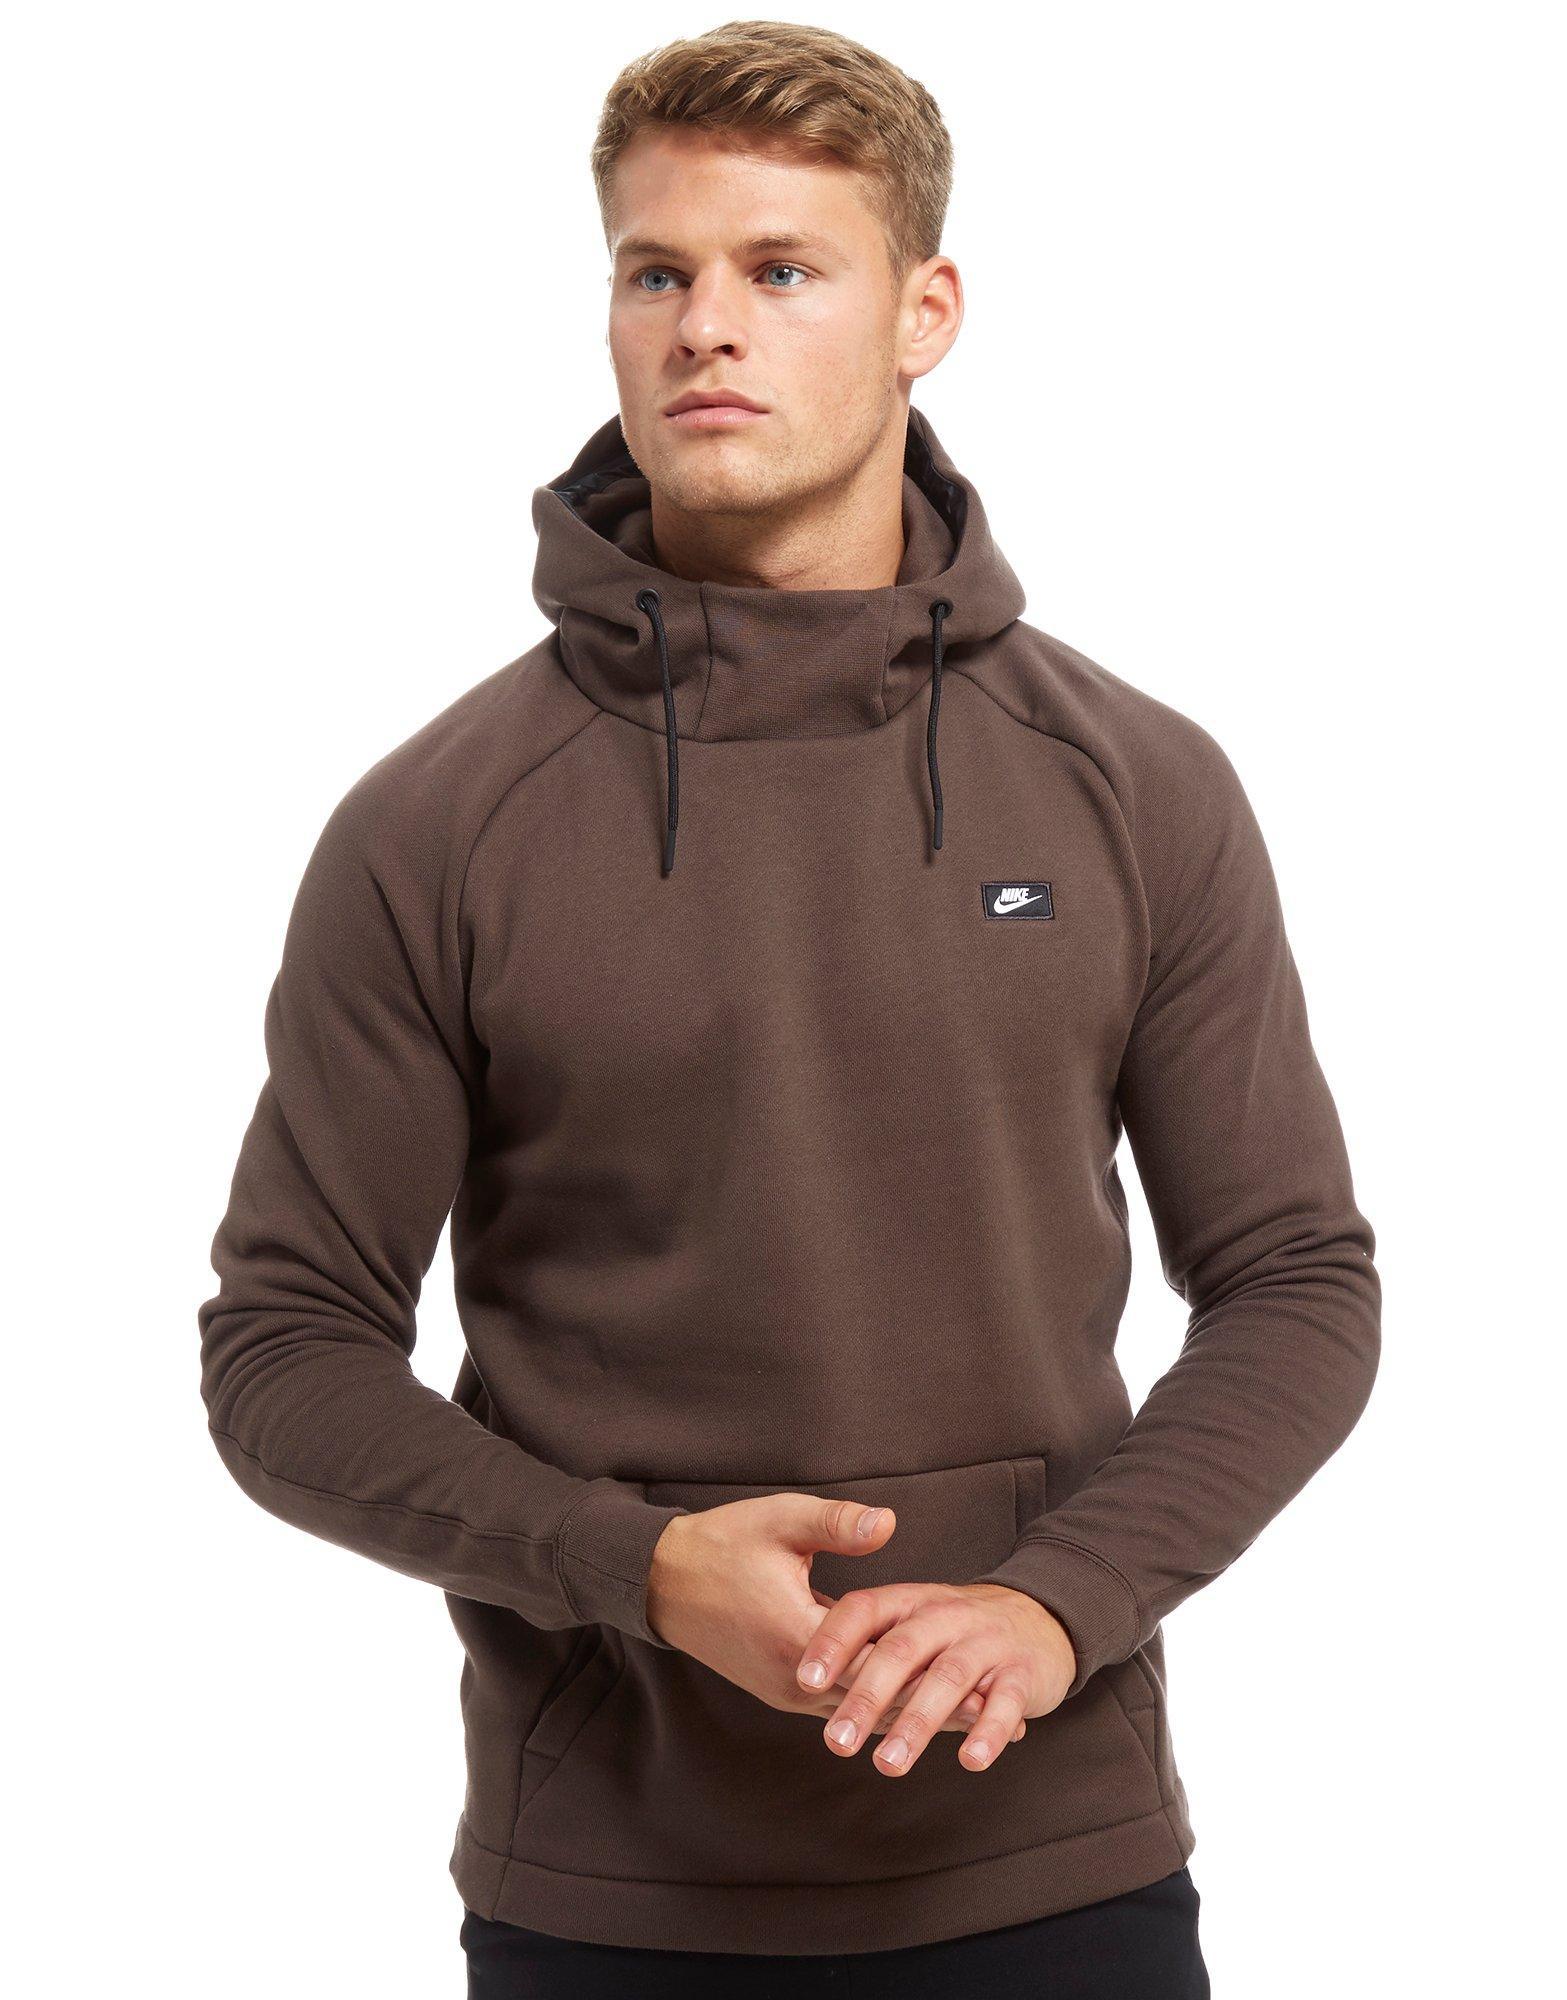 Nike Cotton Modern Overhead Hoodie in Brown for Men - Lyst